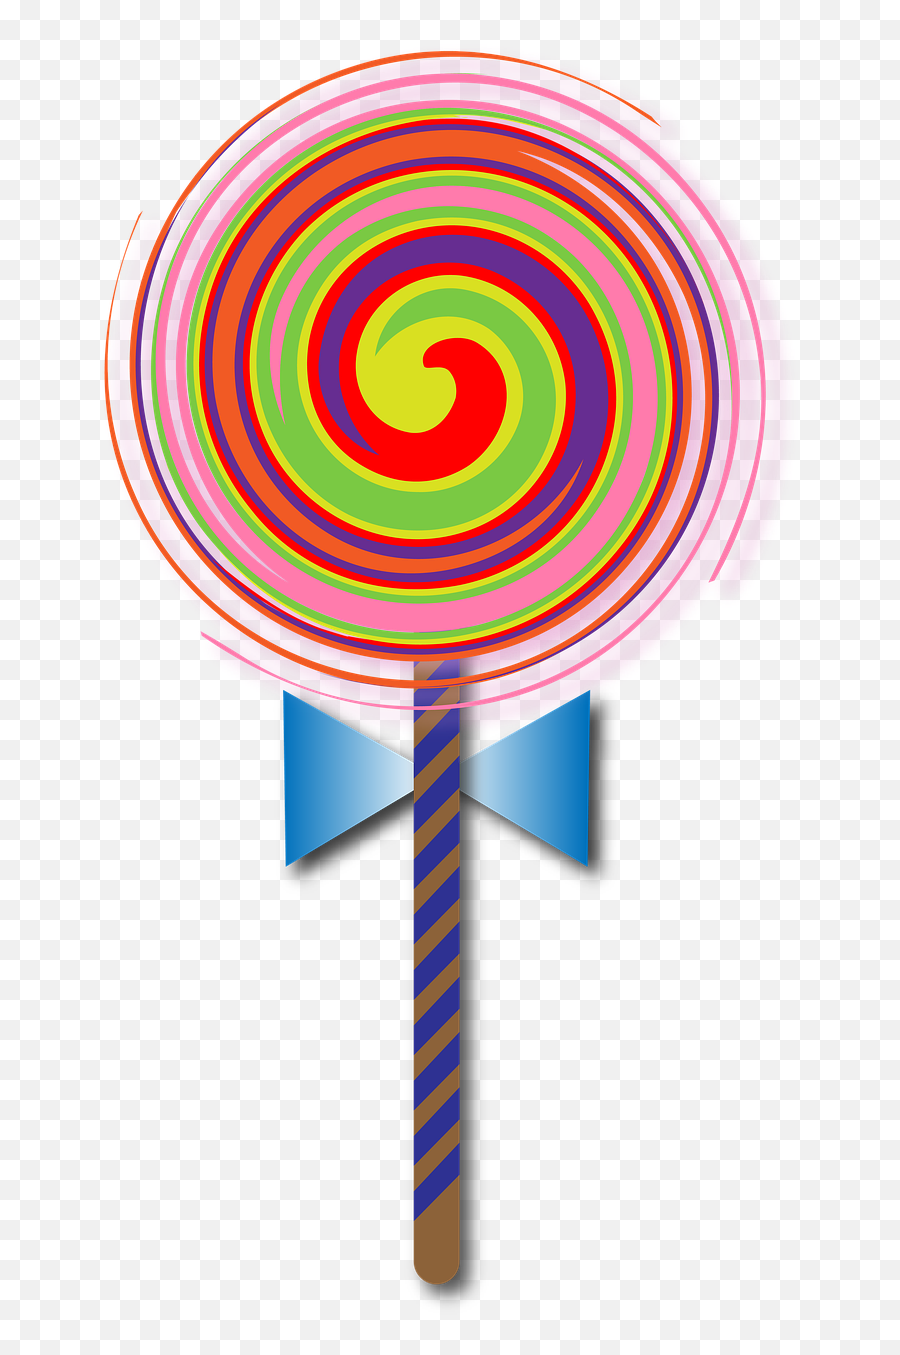 Lollipop Sweets Sweet - Free Image On Pixabay Lollipop Png,Lollipop Transparent Background